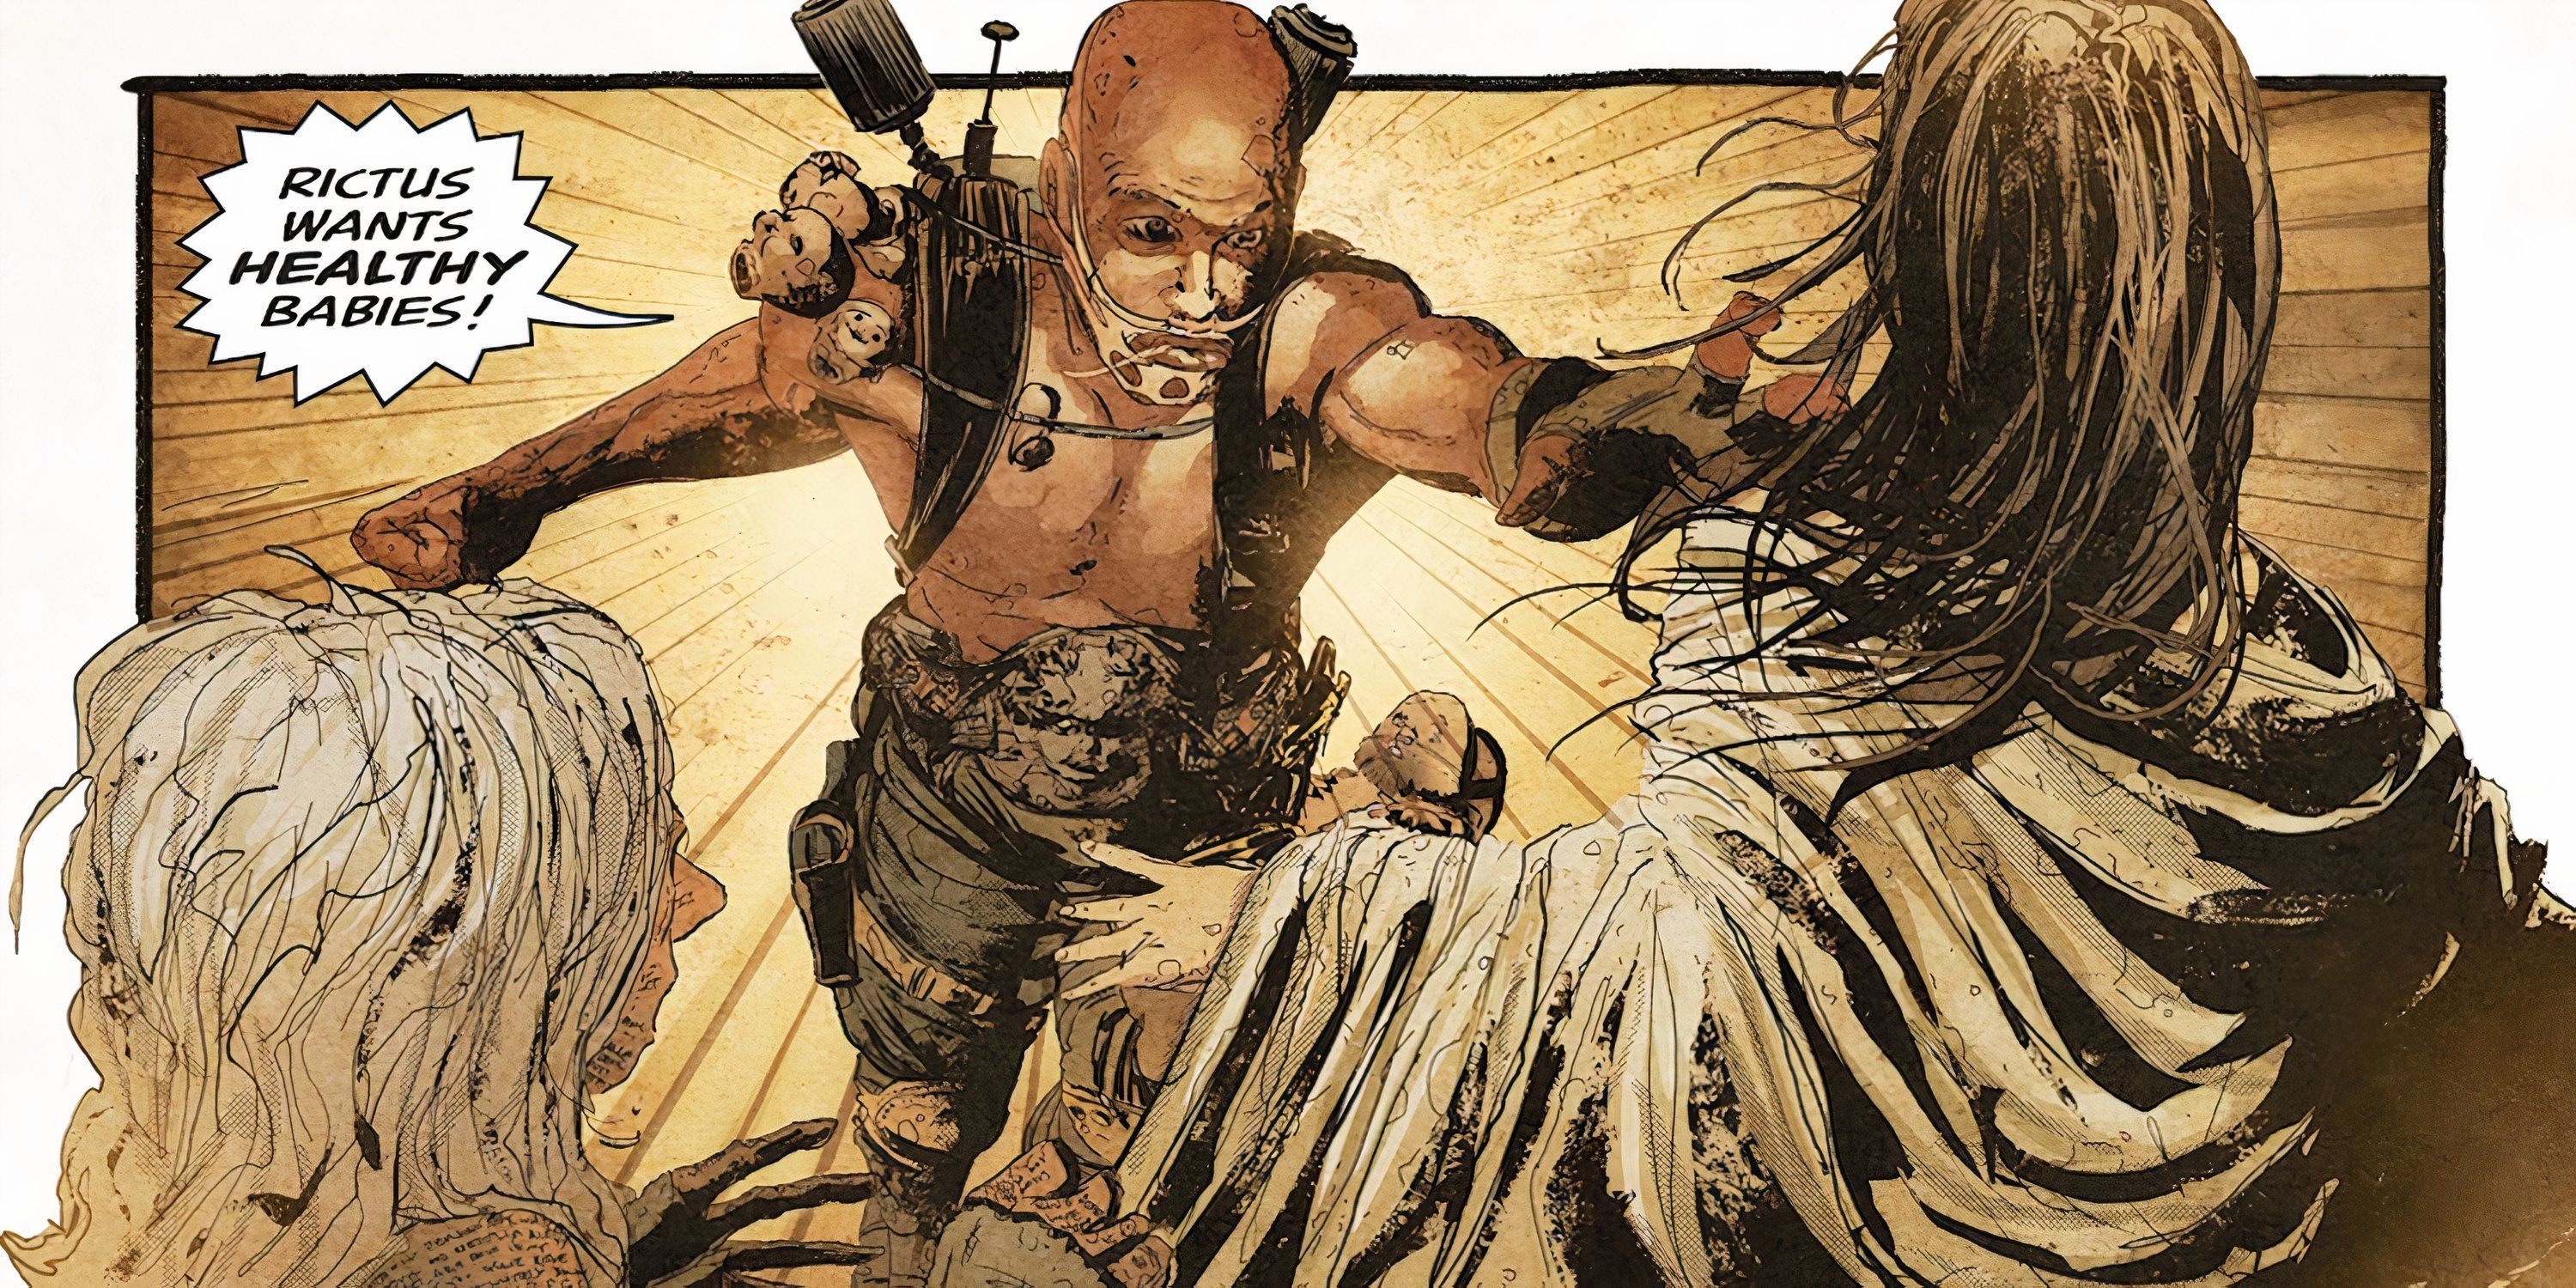 Rictus attacks Immortan Joe's wives in the Mad Max: Fury Road comic.